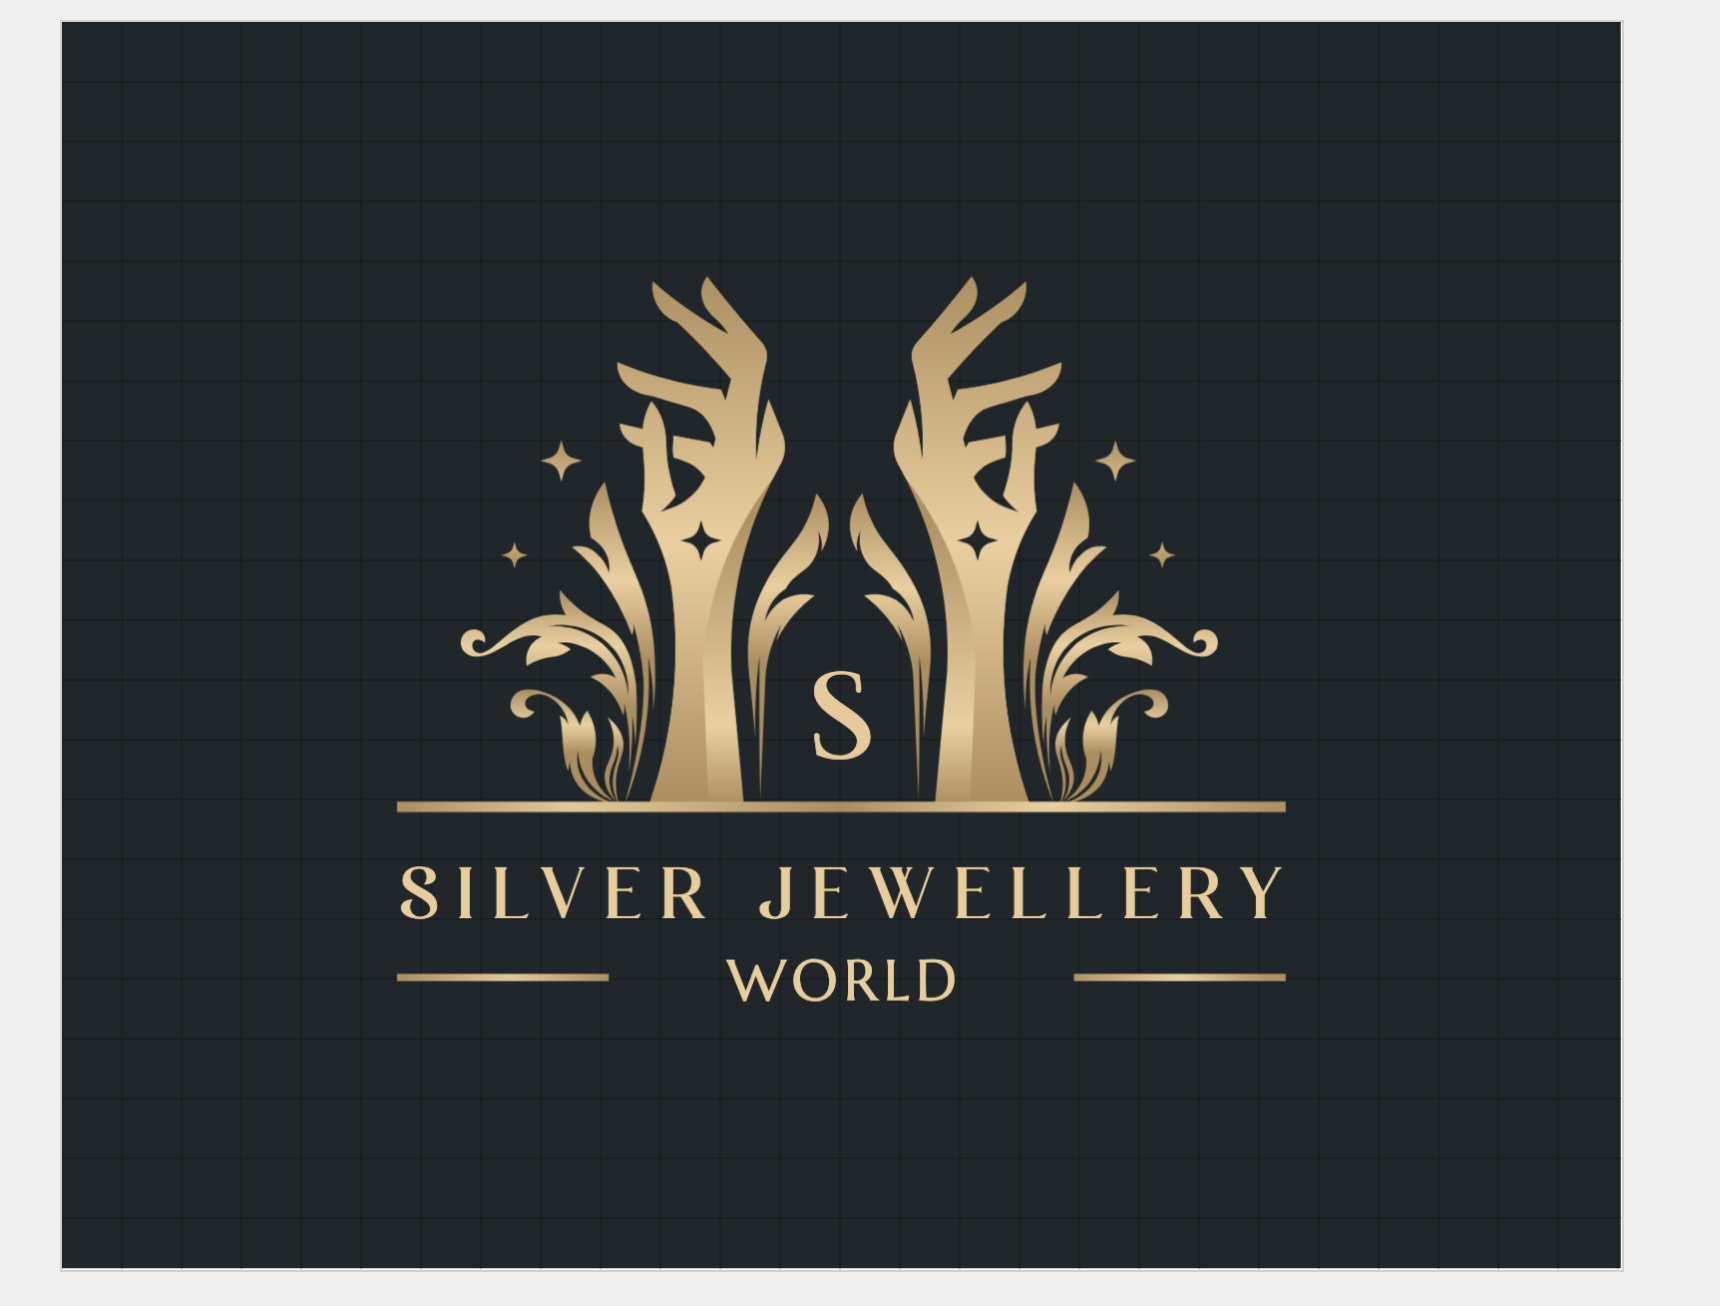 Silver Jewellery World